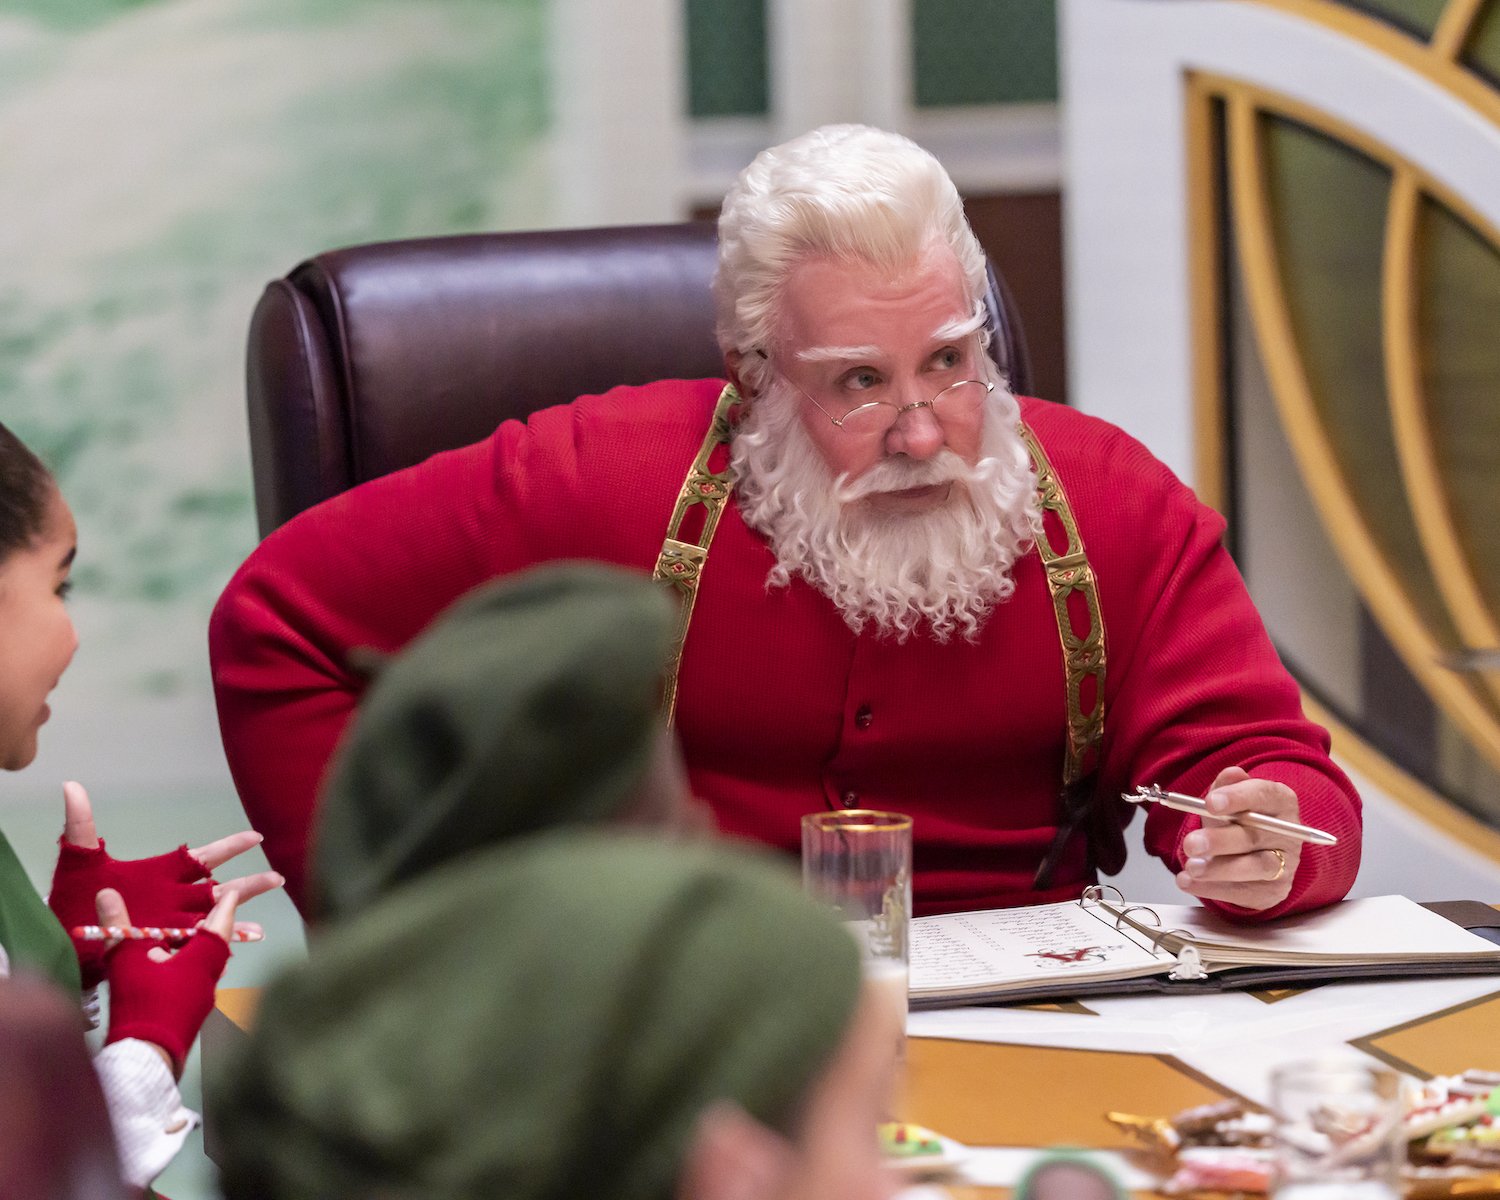 Tim Allen as Santa Claus in the Disney+ original spinoff series 'The Santa Clauses' episode 1